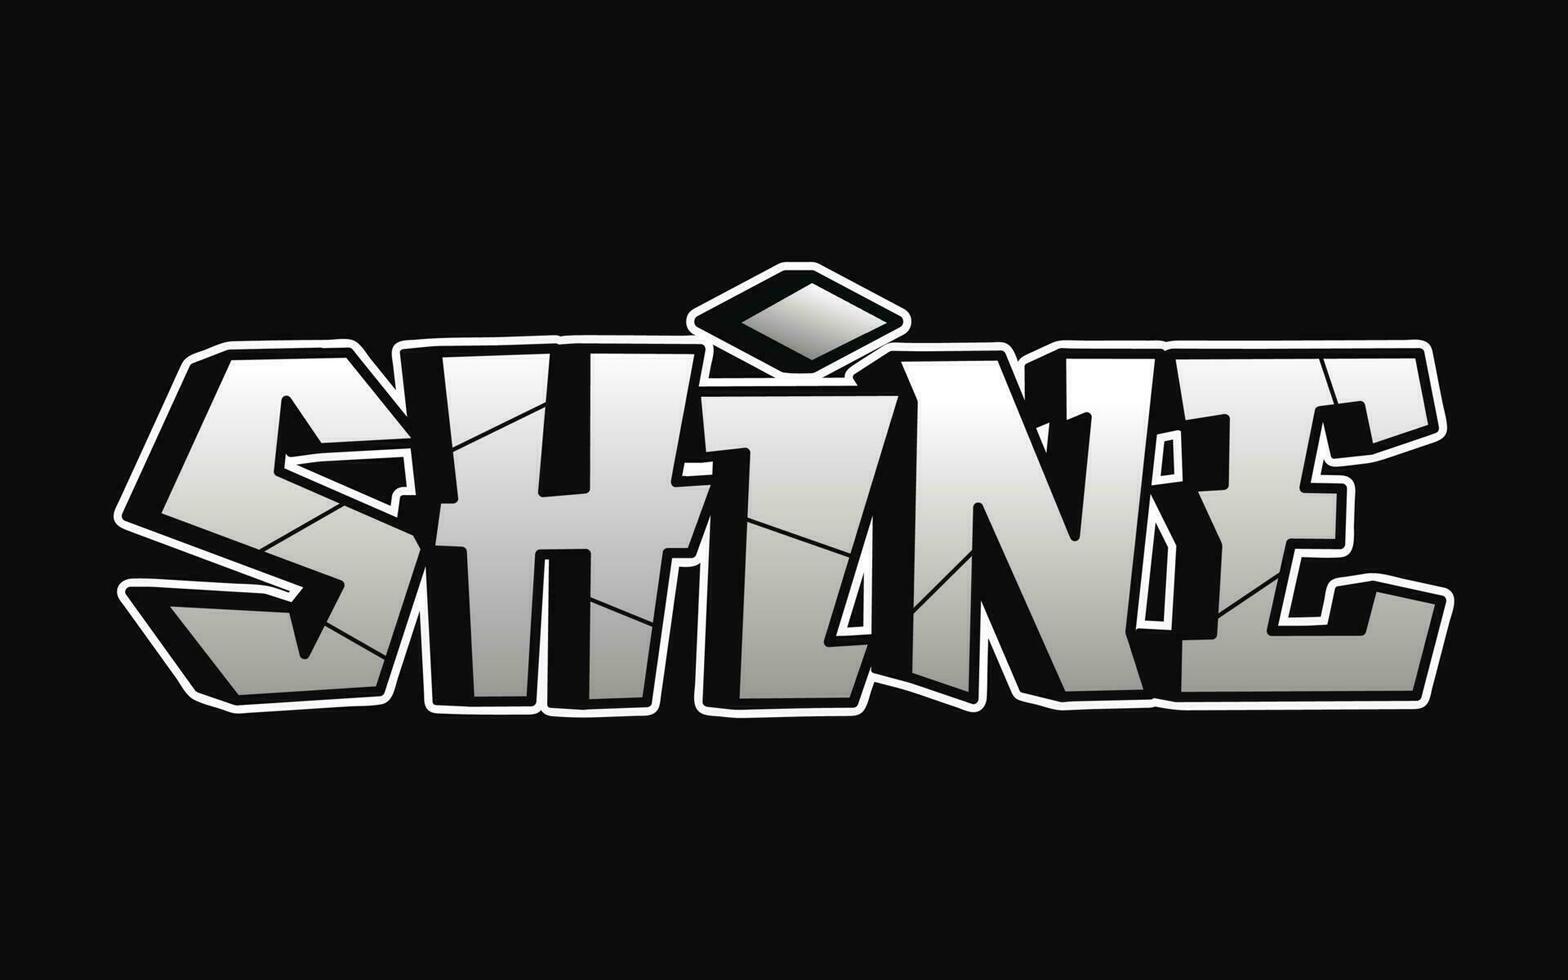 Shine - single word, letters graffiti style. Vector hand drawn logo. Funny cool trippy word Shine, fashion, graffiti style print t-shirt, poster concept